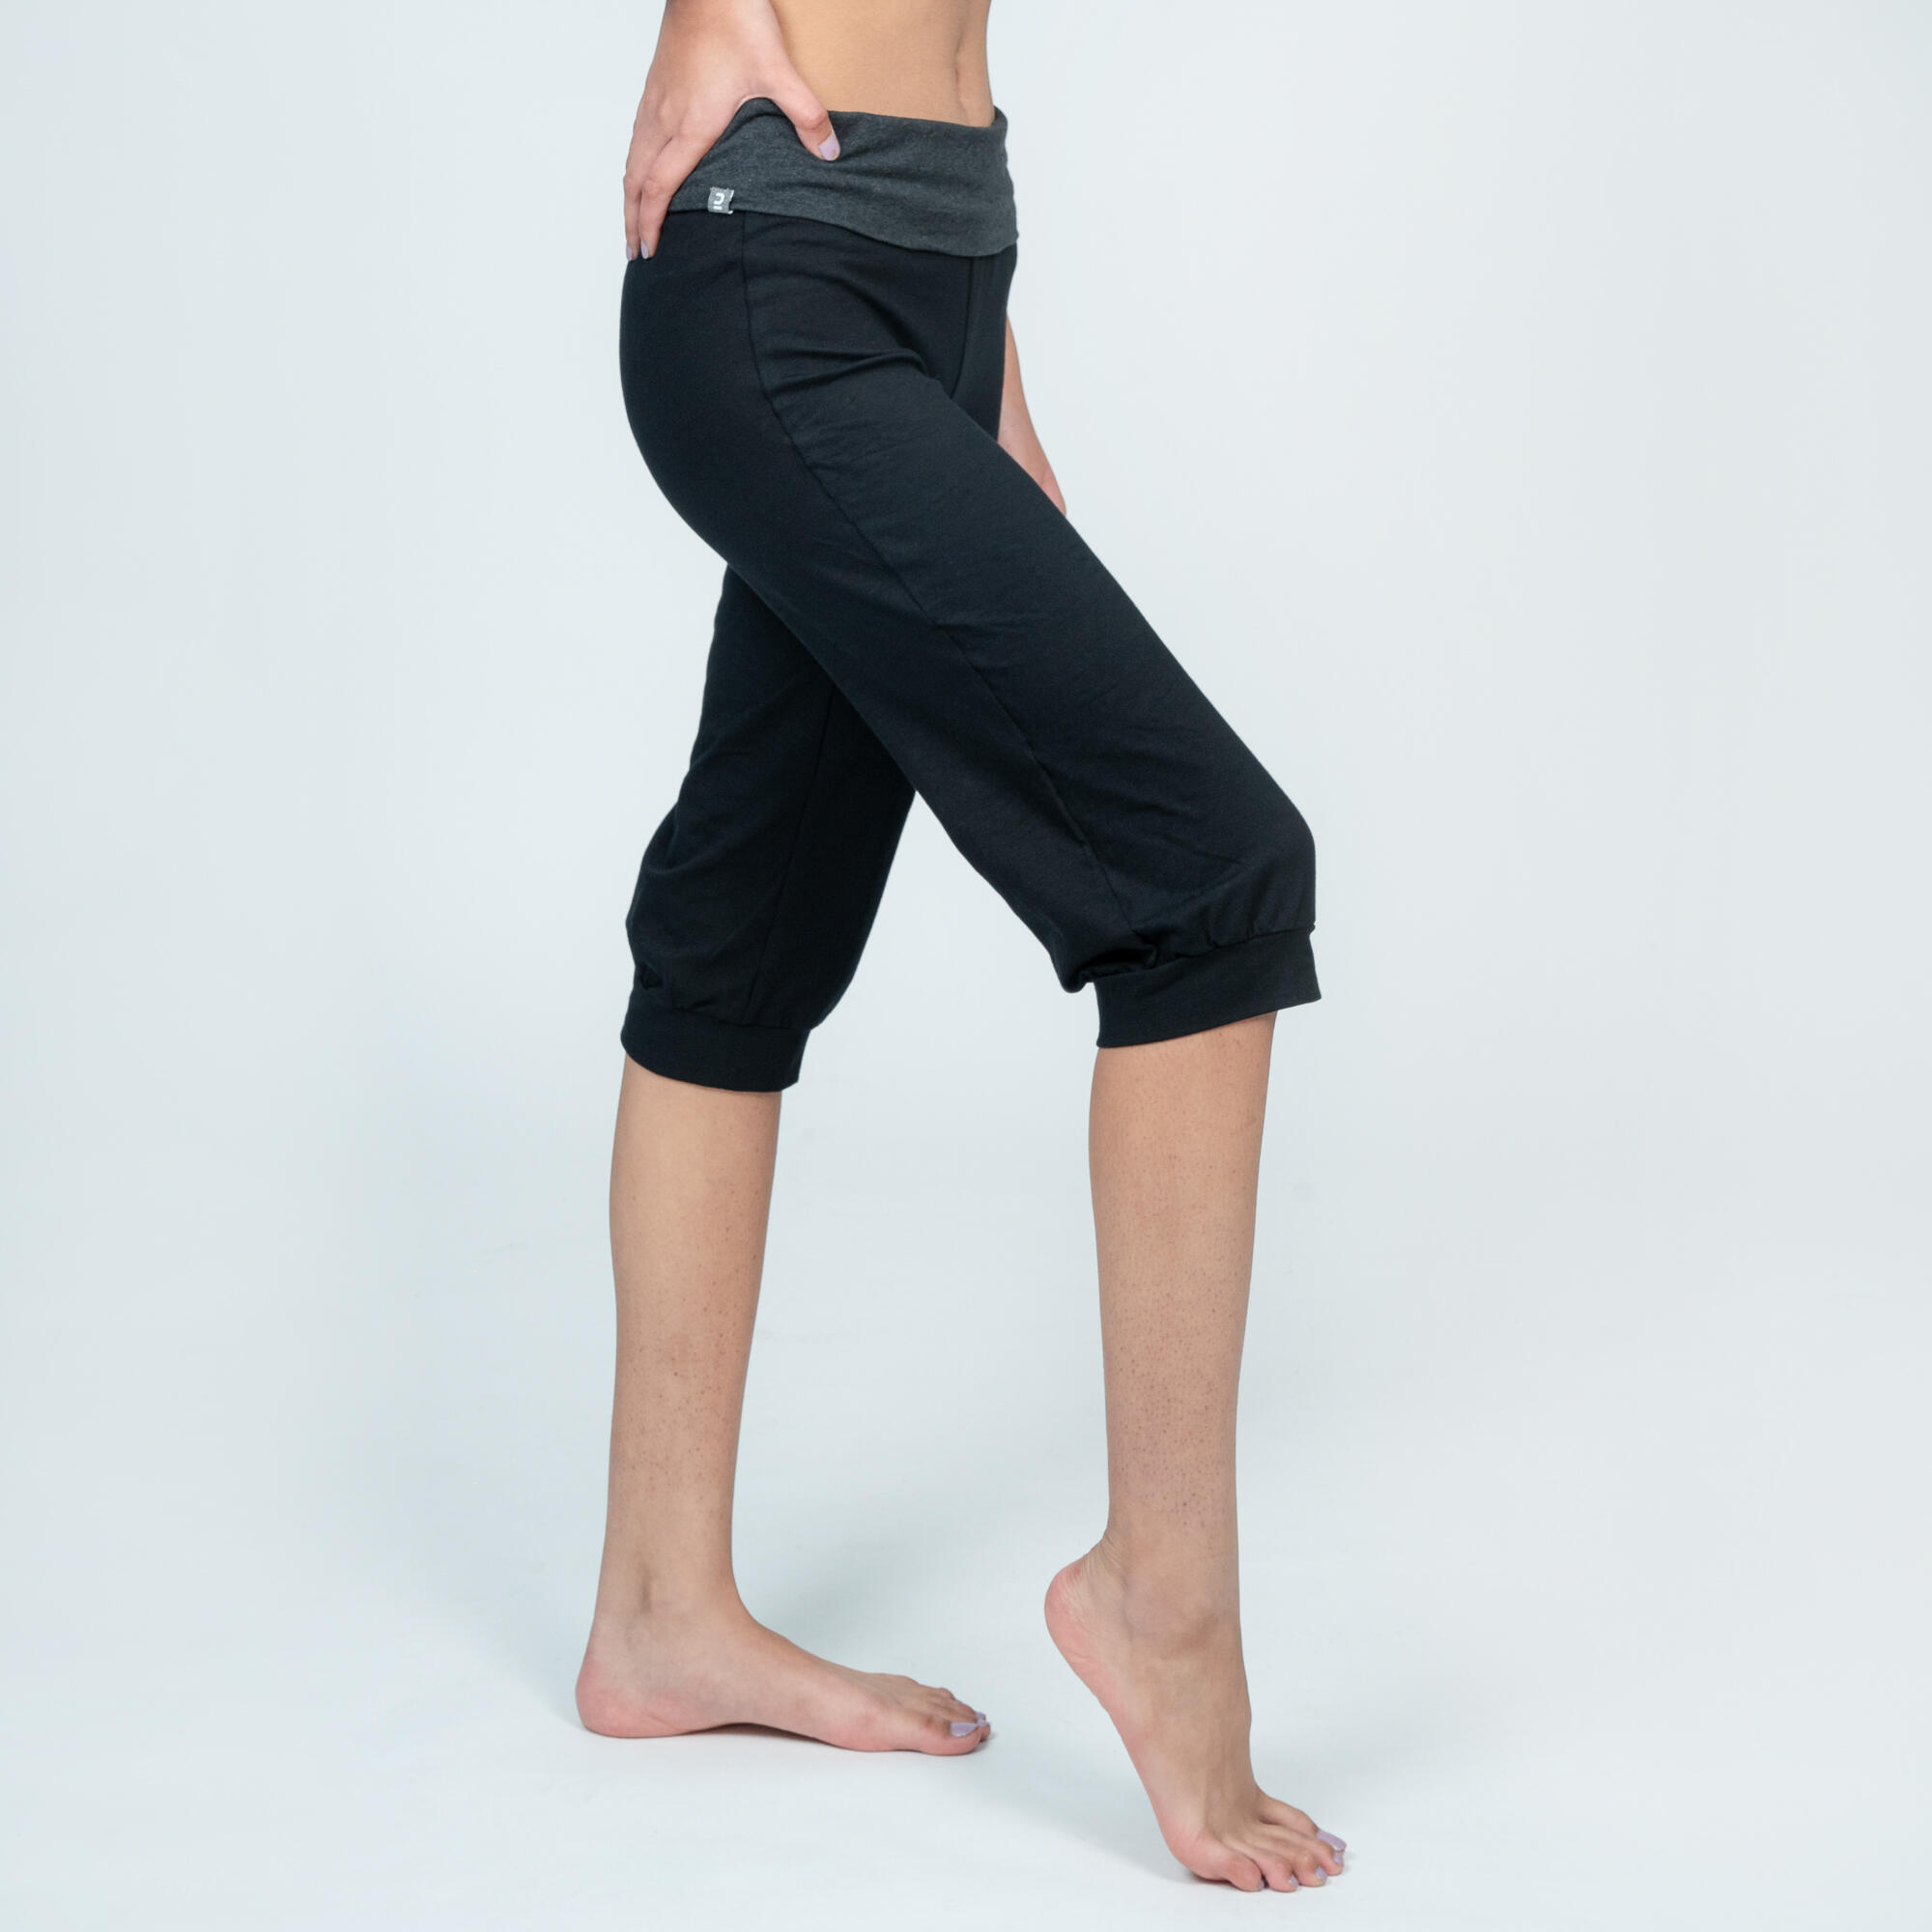 Joseph Ribkoff Black Capri Pants Style 231021